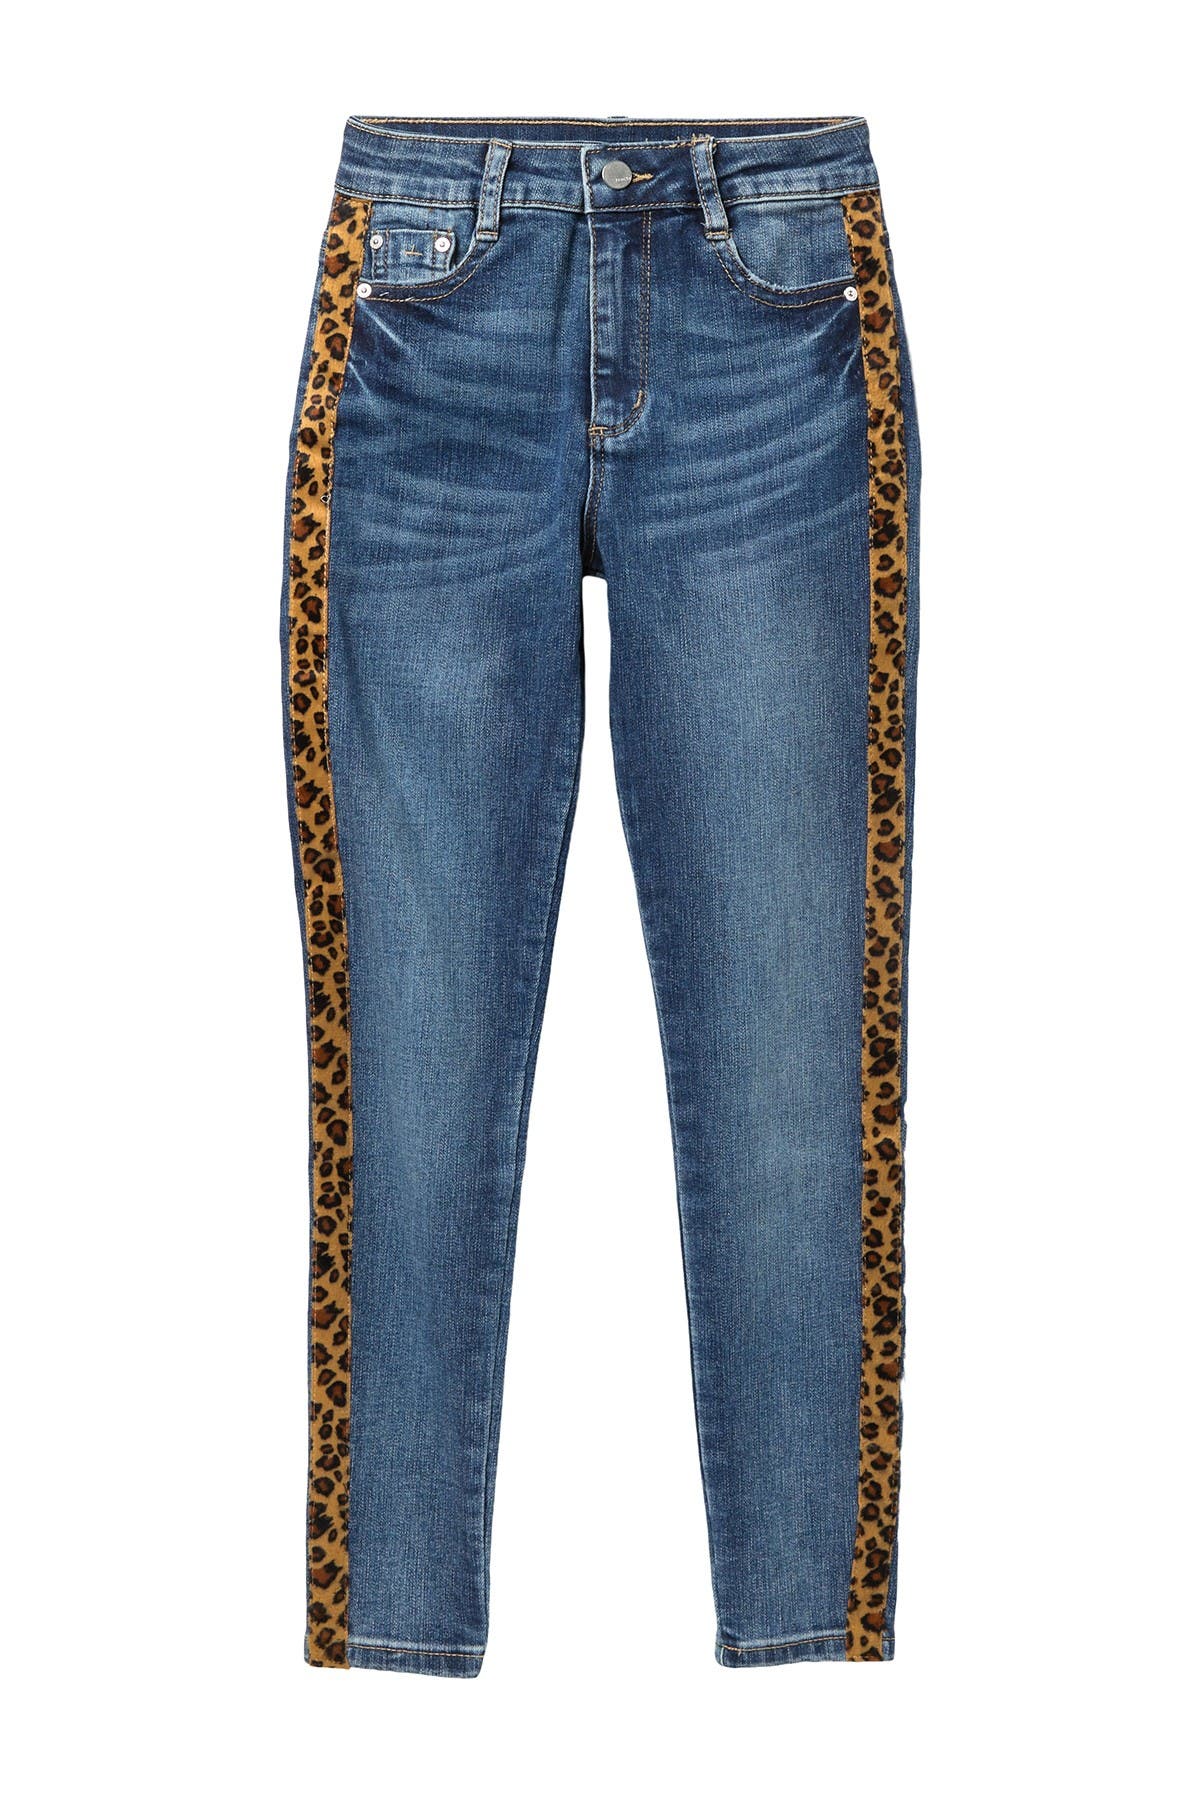 jeans with leopard stripe